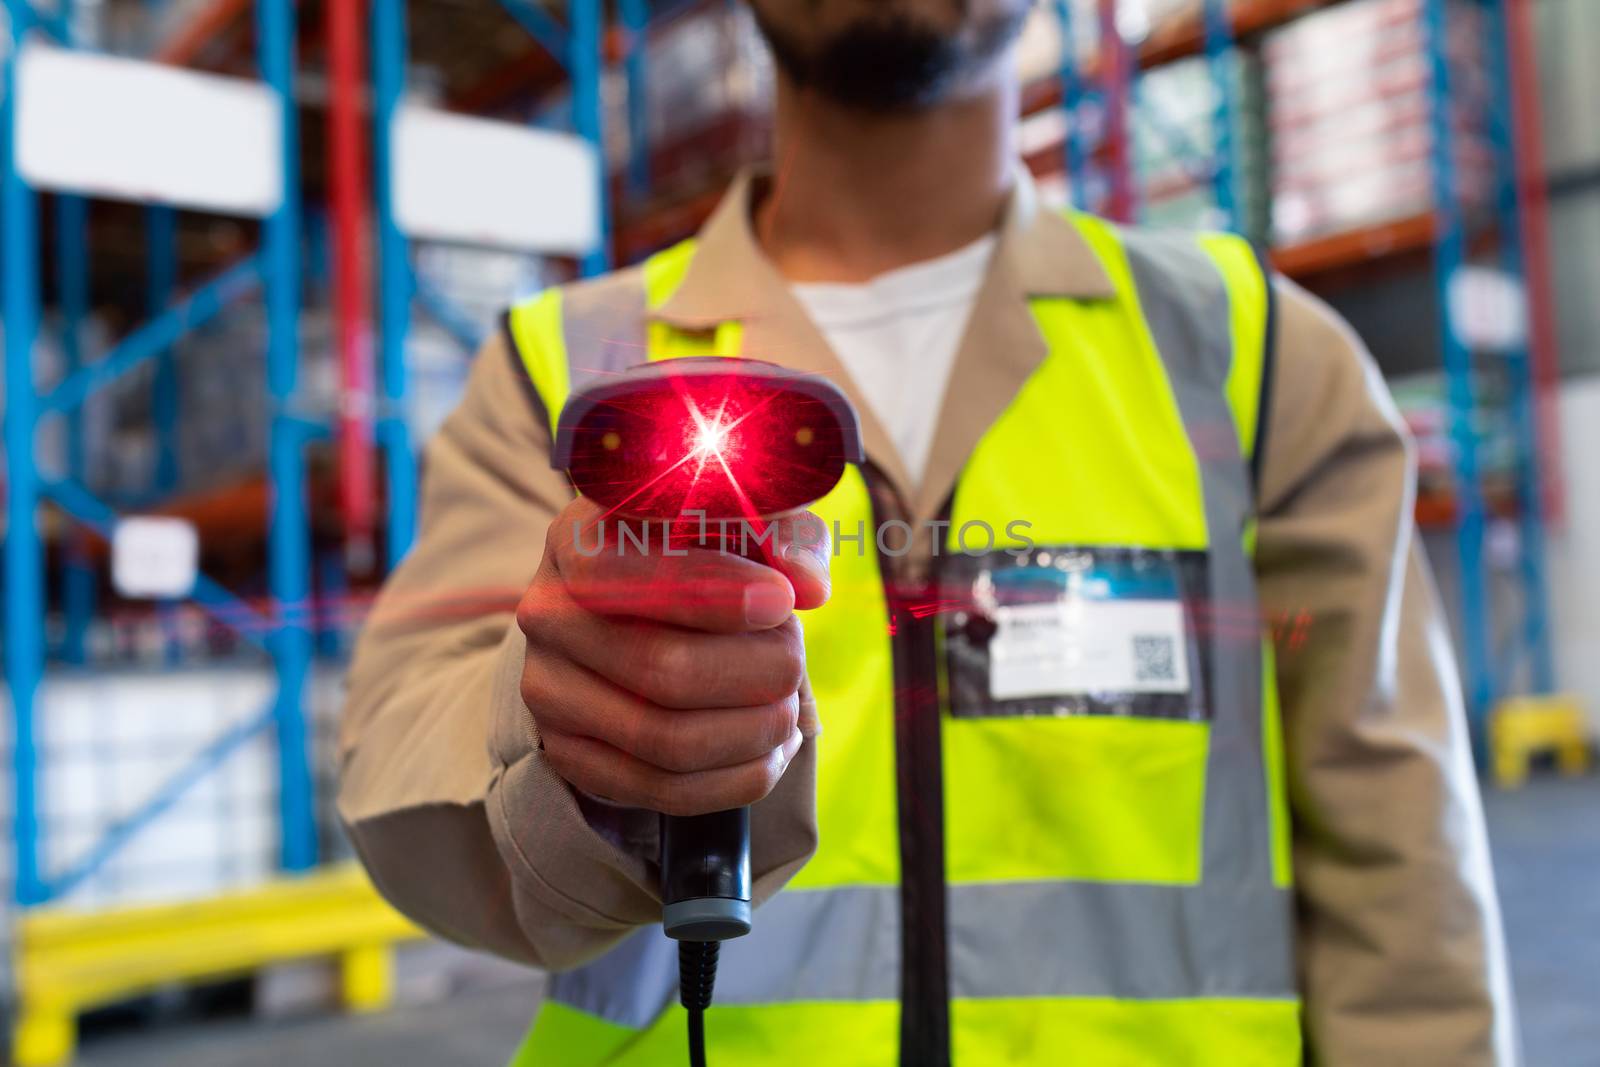 Male worker showing barcode scanner on camera in warehouse by Wavebreakmedia